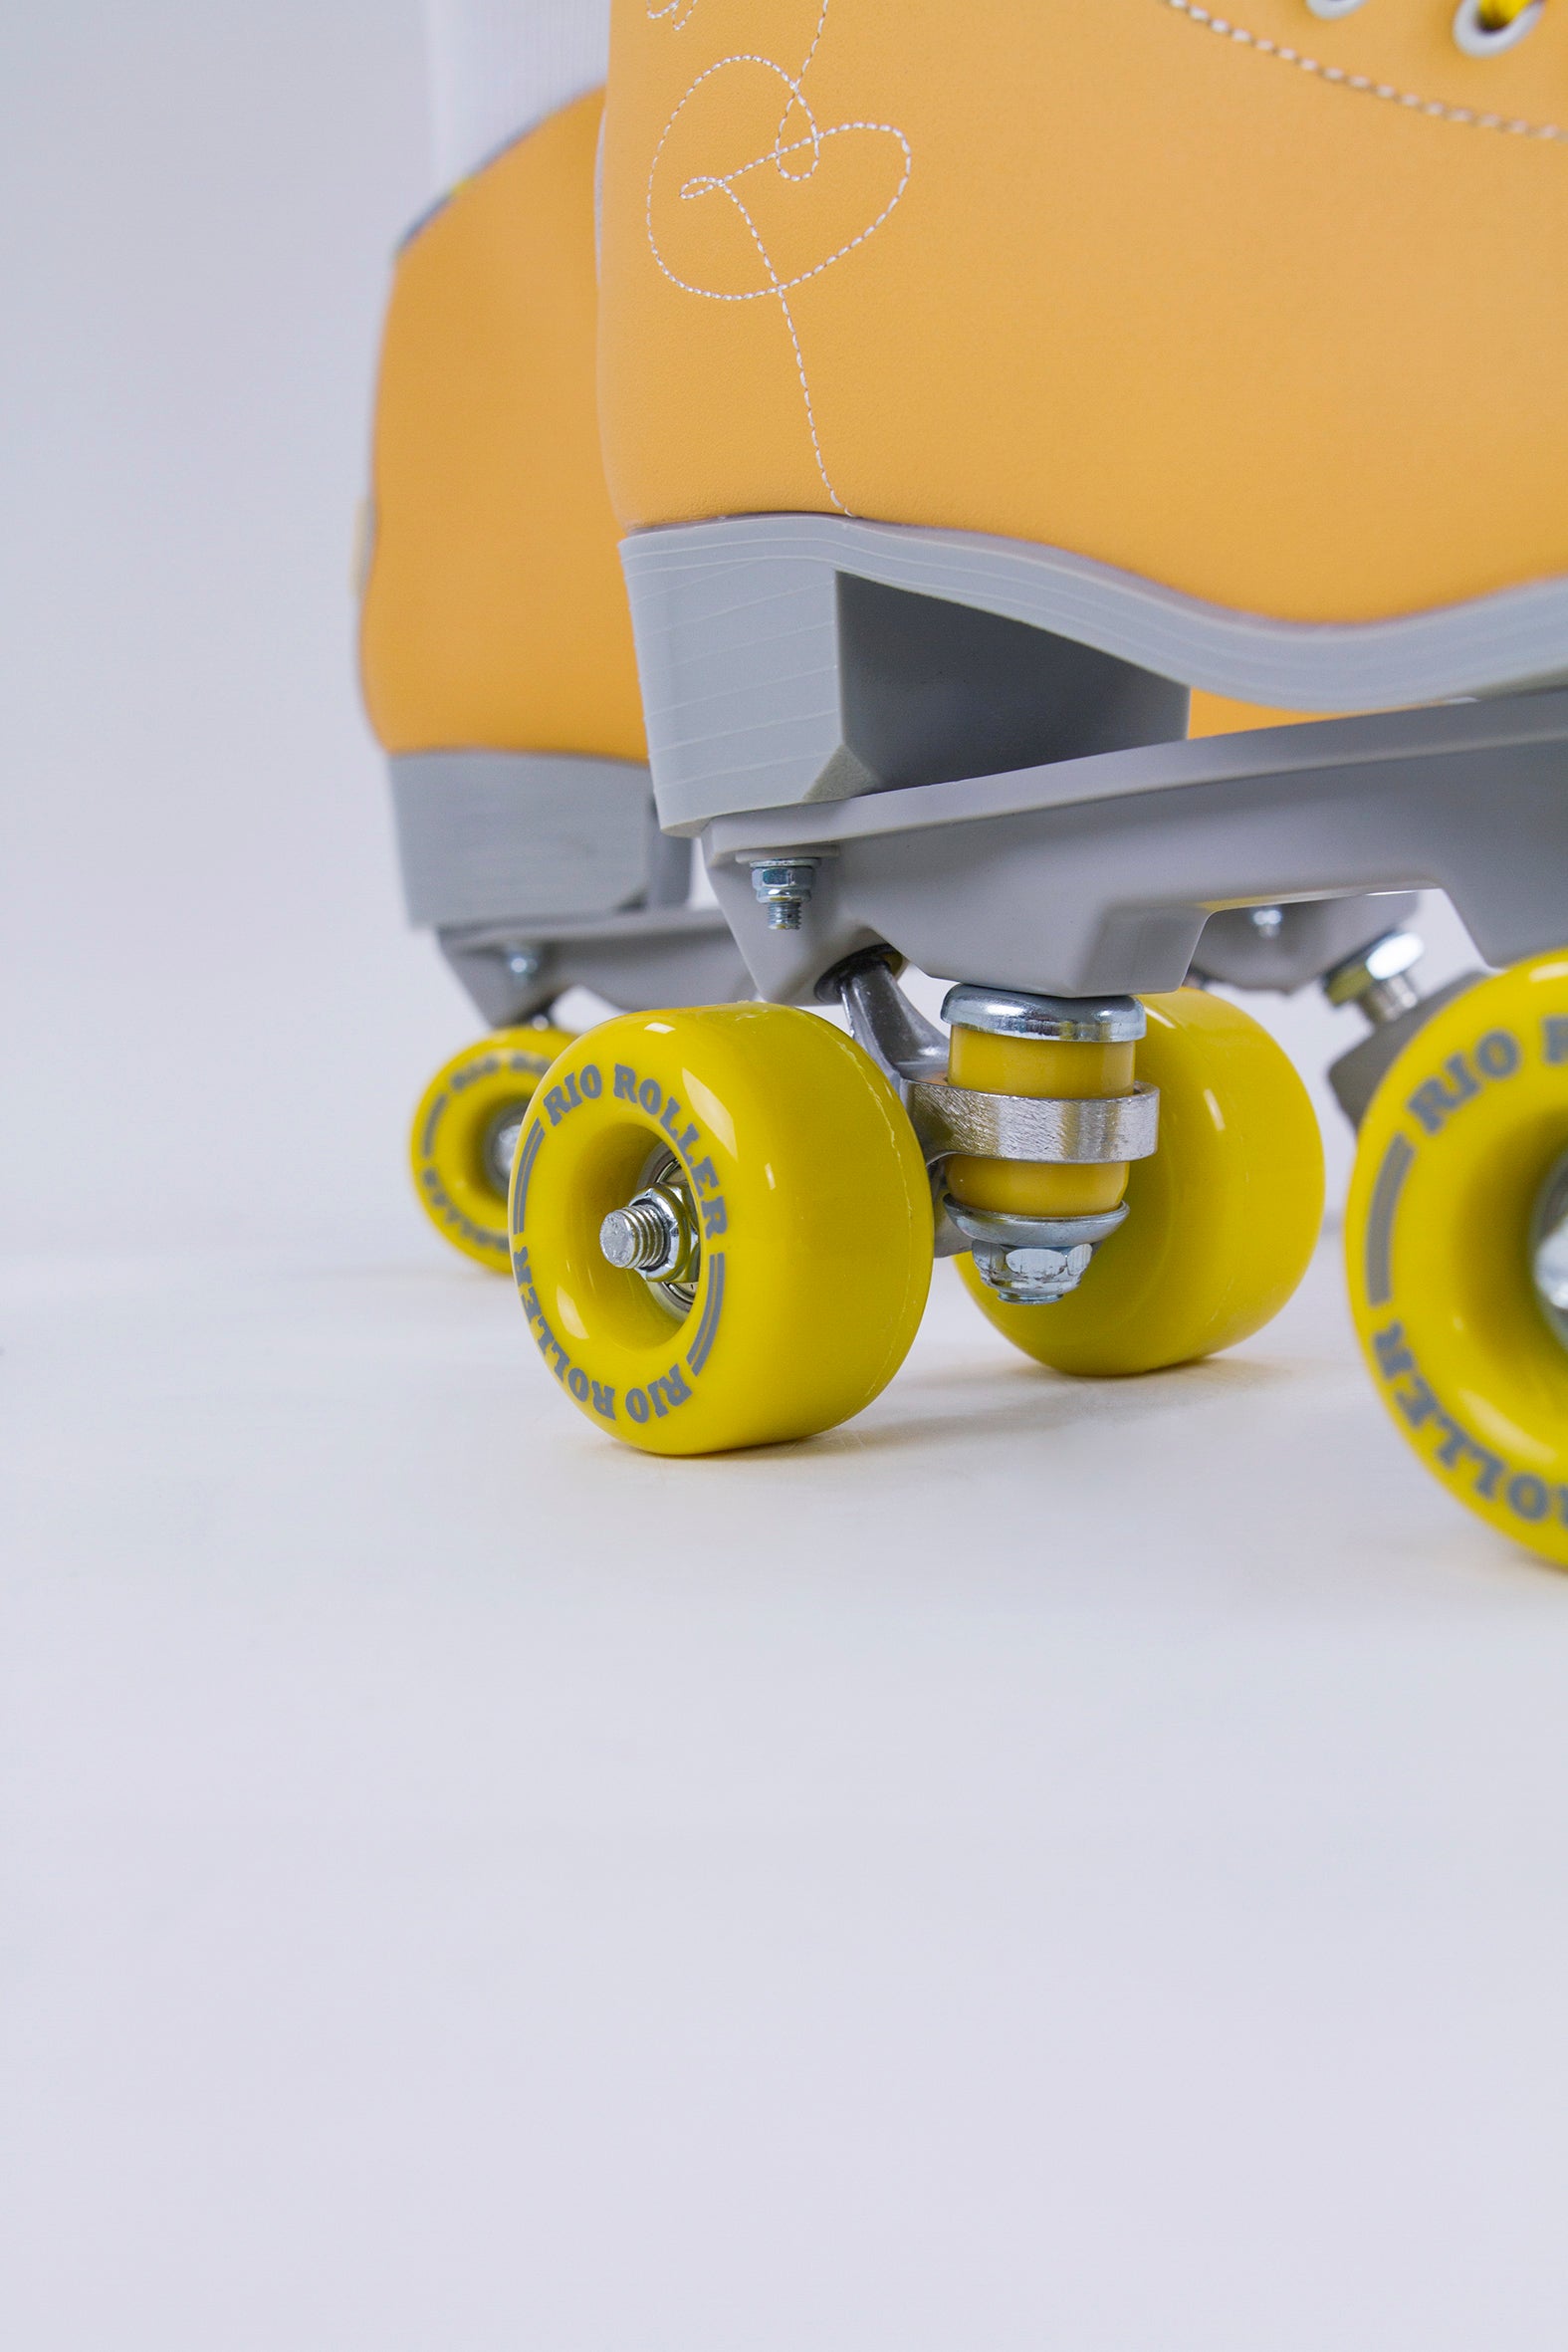 Rio Roller Signature Quad Skates - Yellow - Momma Trucker Skates